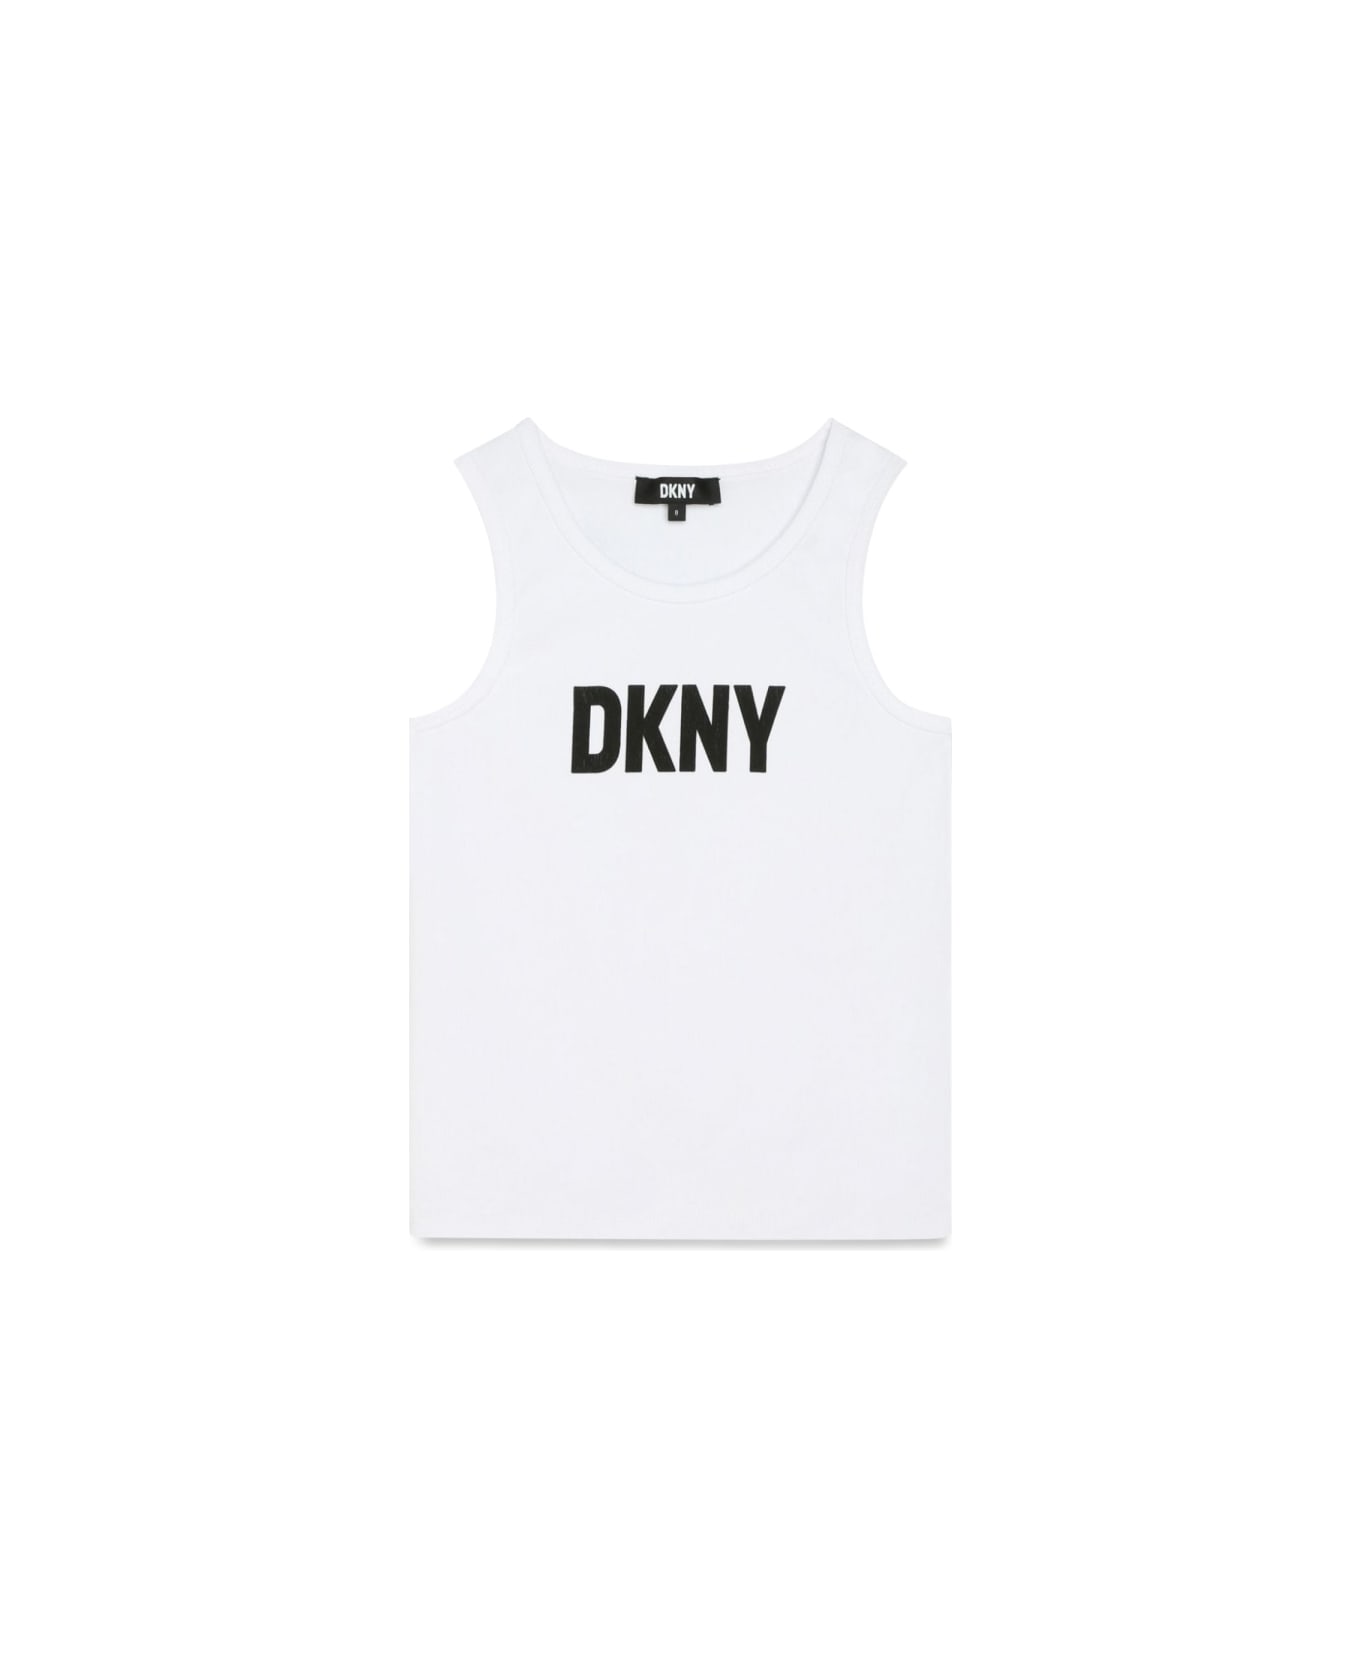 DKNY Tee Shirt - GREEN